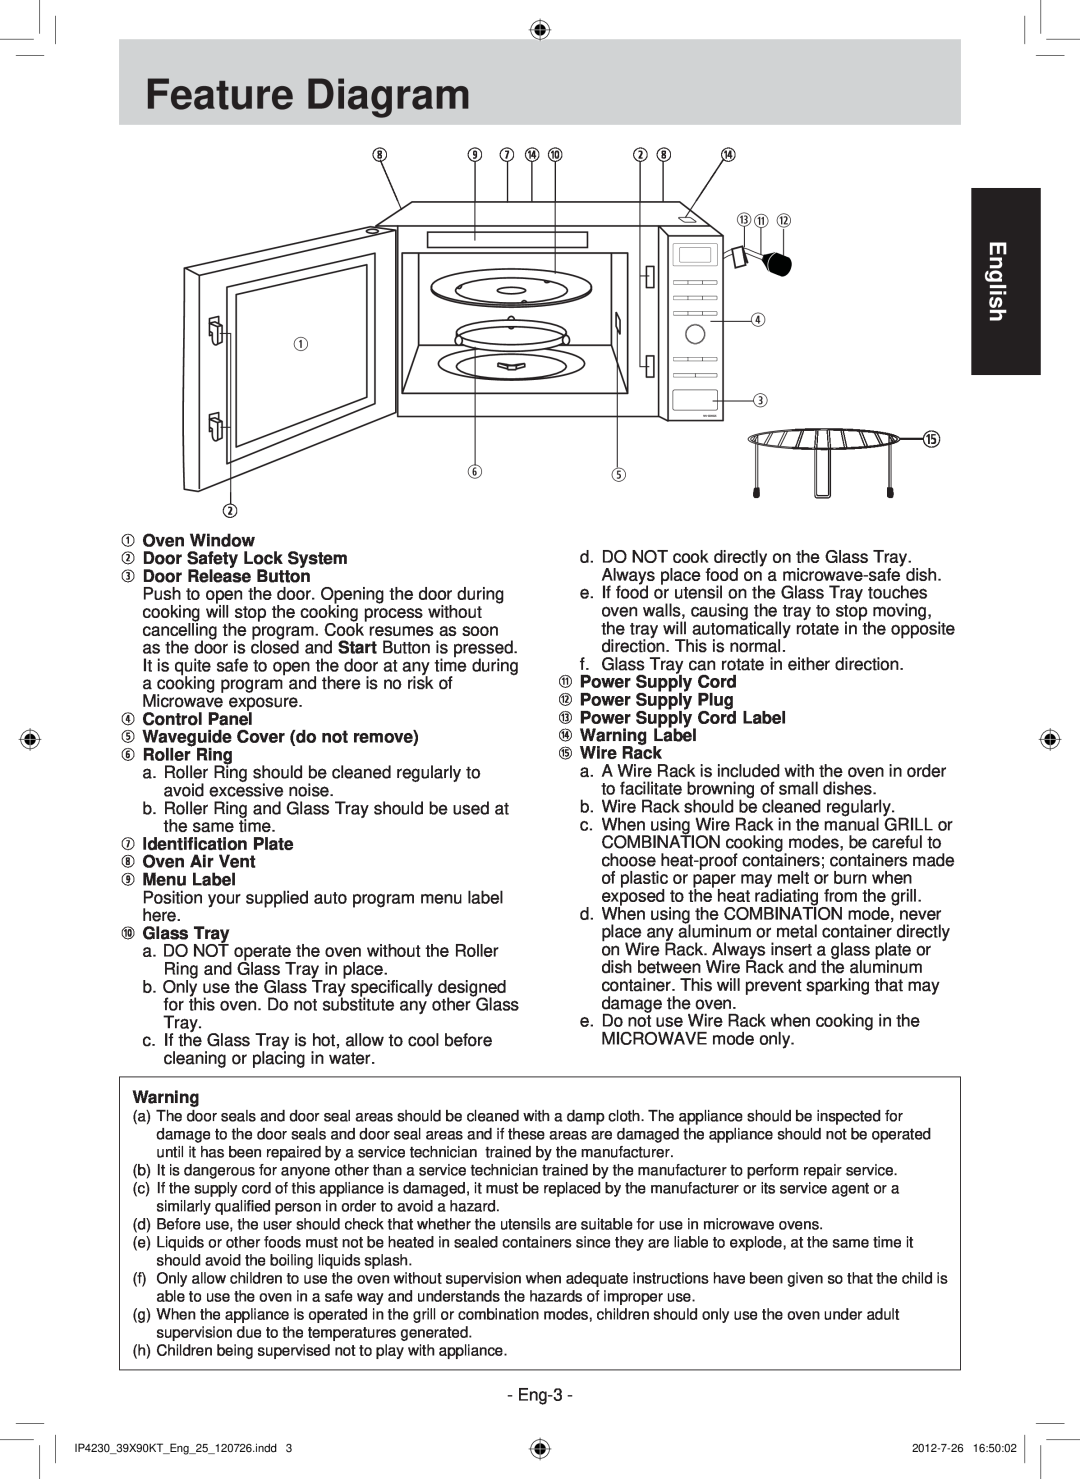 Panasonic F00039X90KT operating instructions Feature Diagram, English 